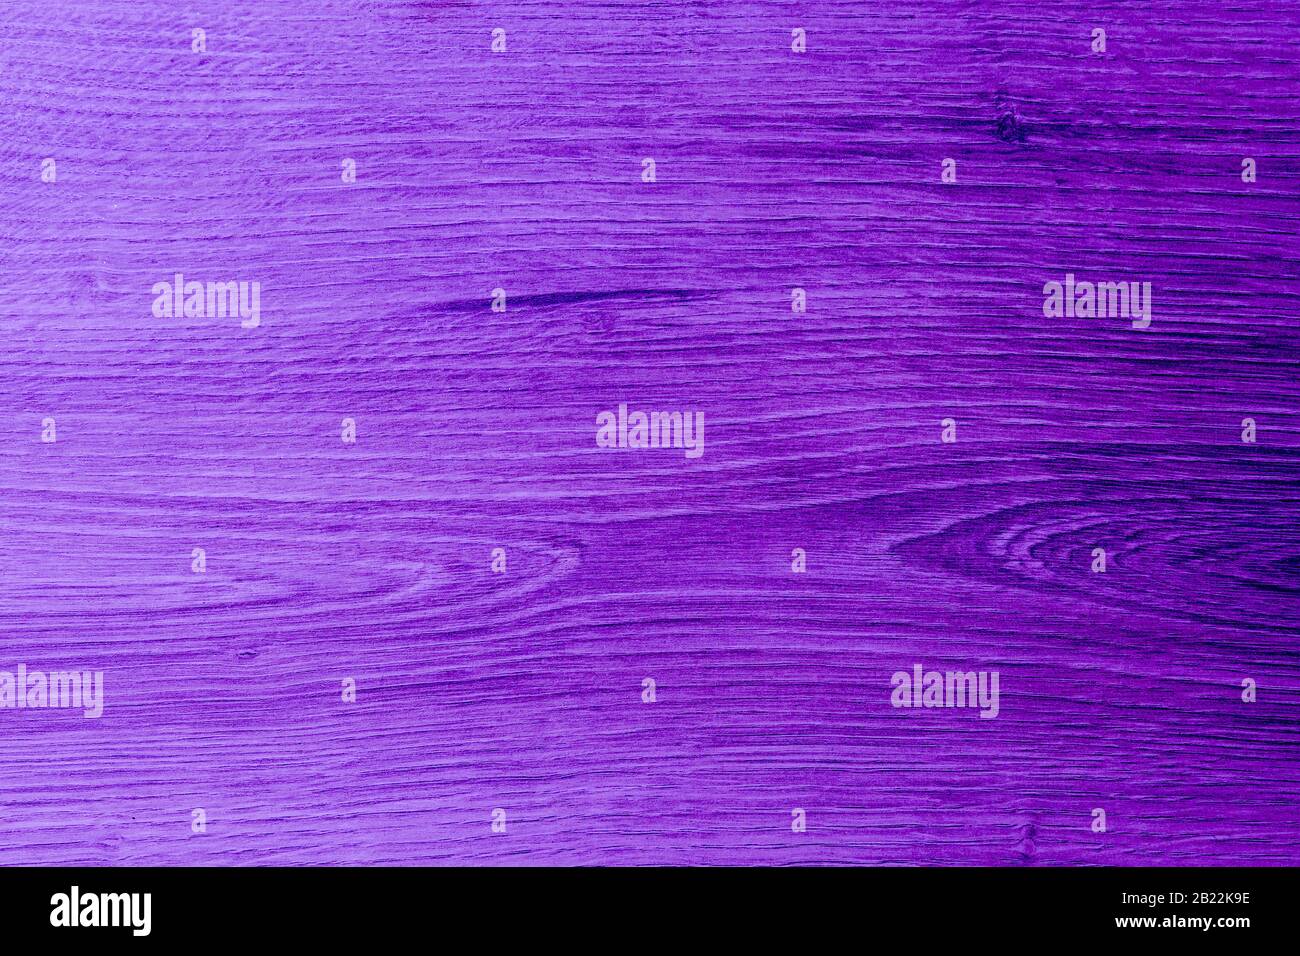 Seamless background of purple wood grain Stock Photo